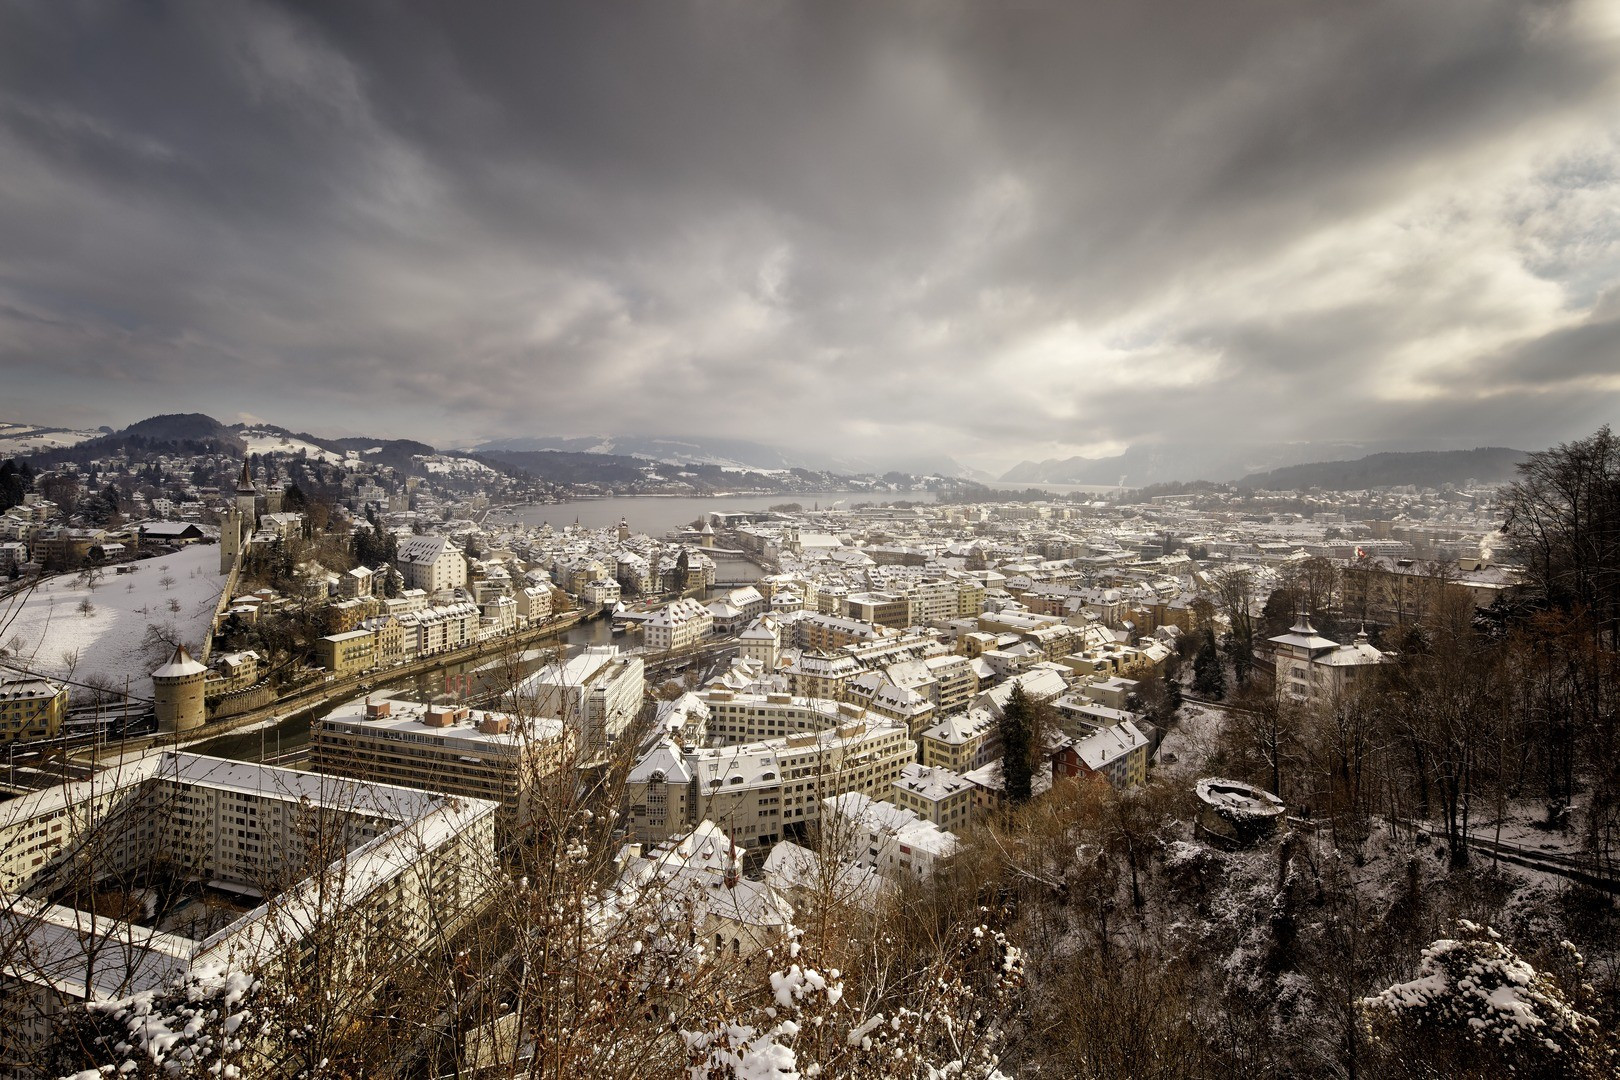 Lucerne 2021 Winter Universiade rescheduled for December after COVID-19 postponement